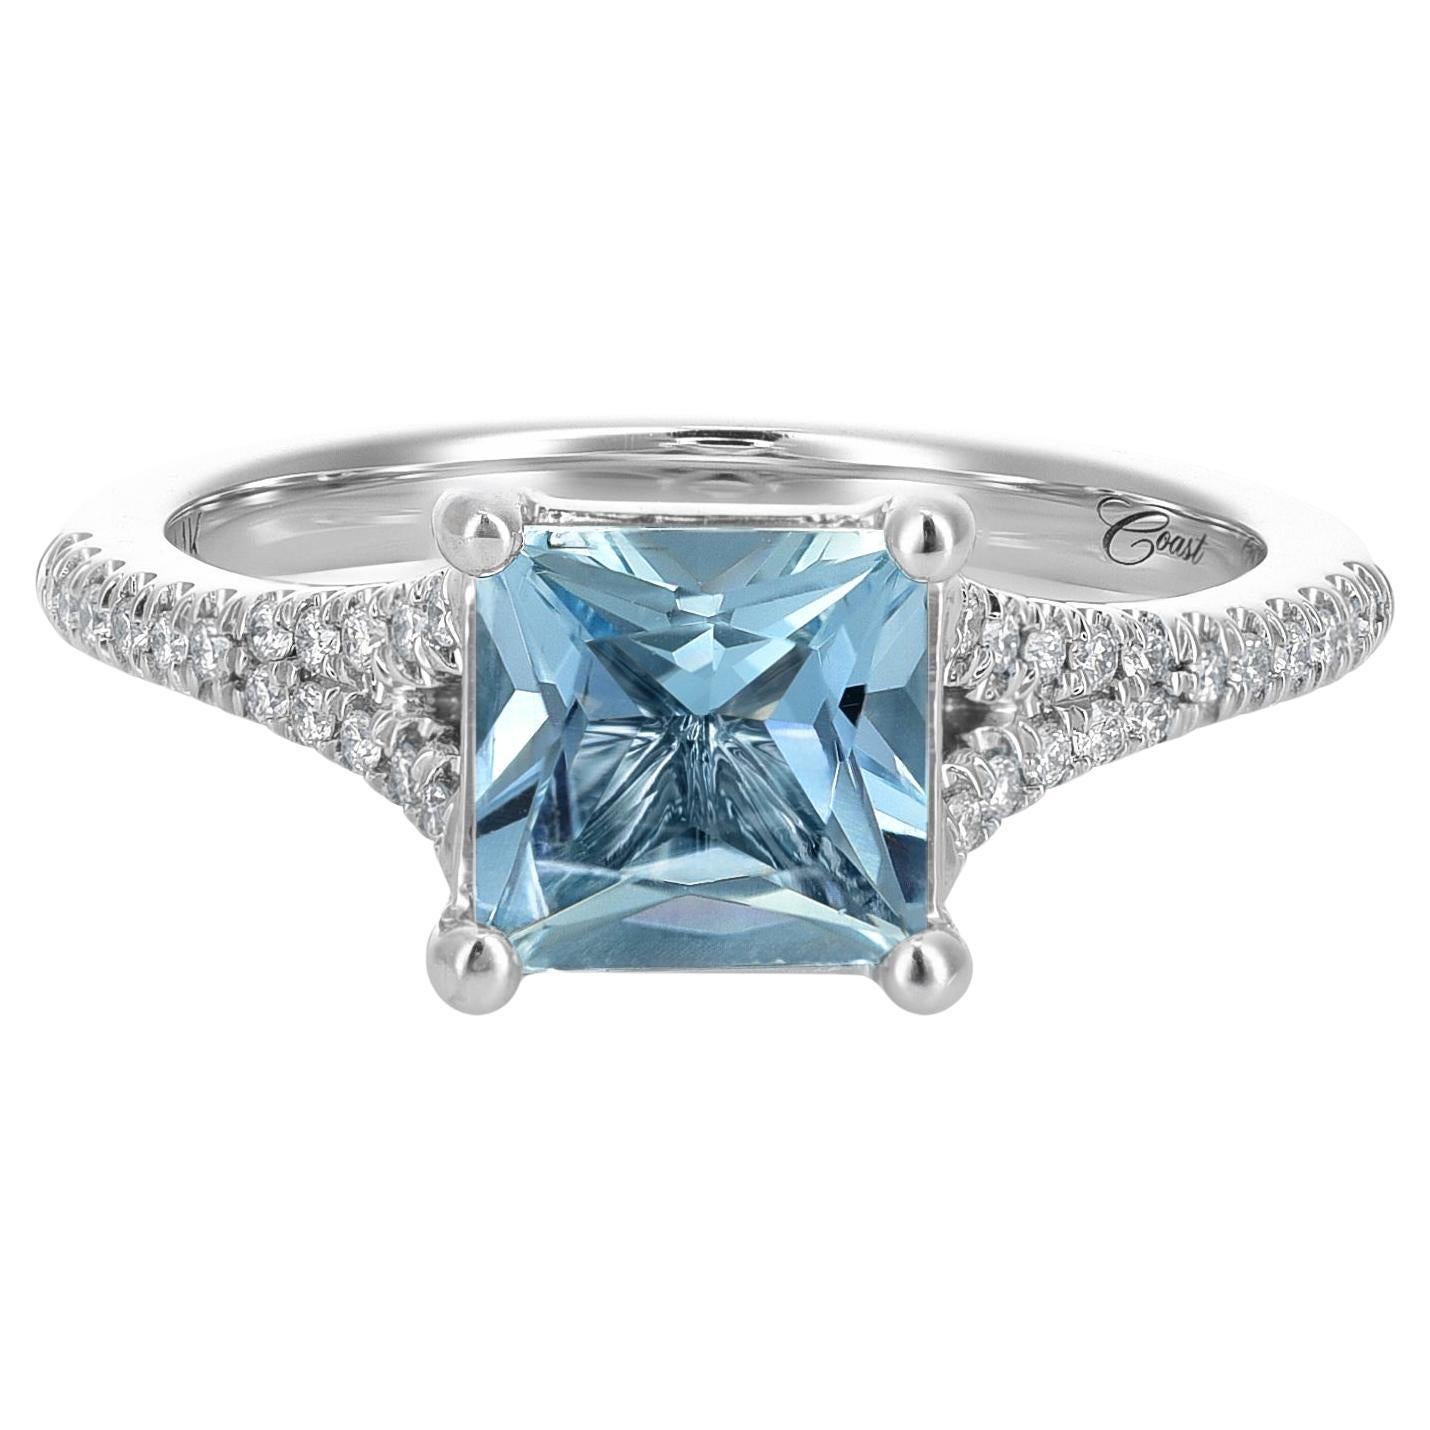 1.14 Carats Aquamarine Diamonds set in 14K White Ring